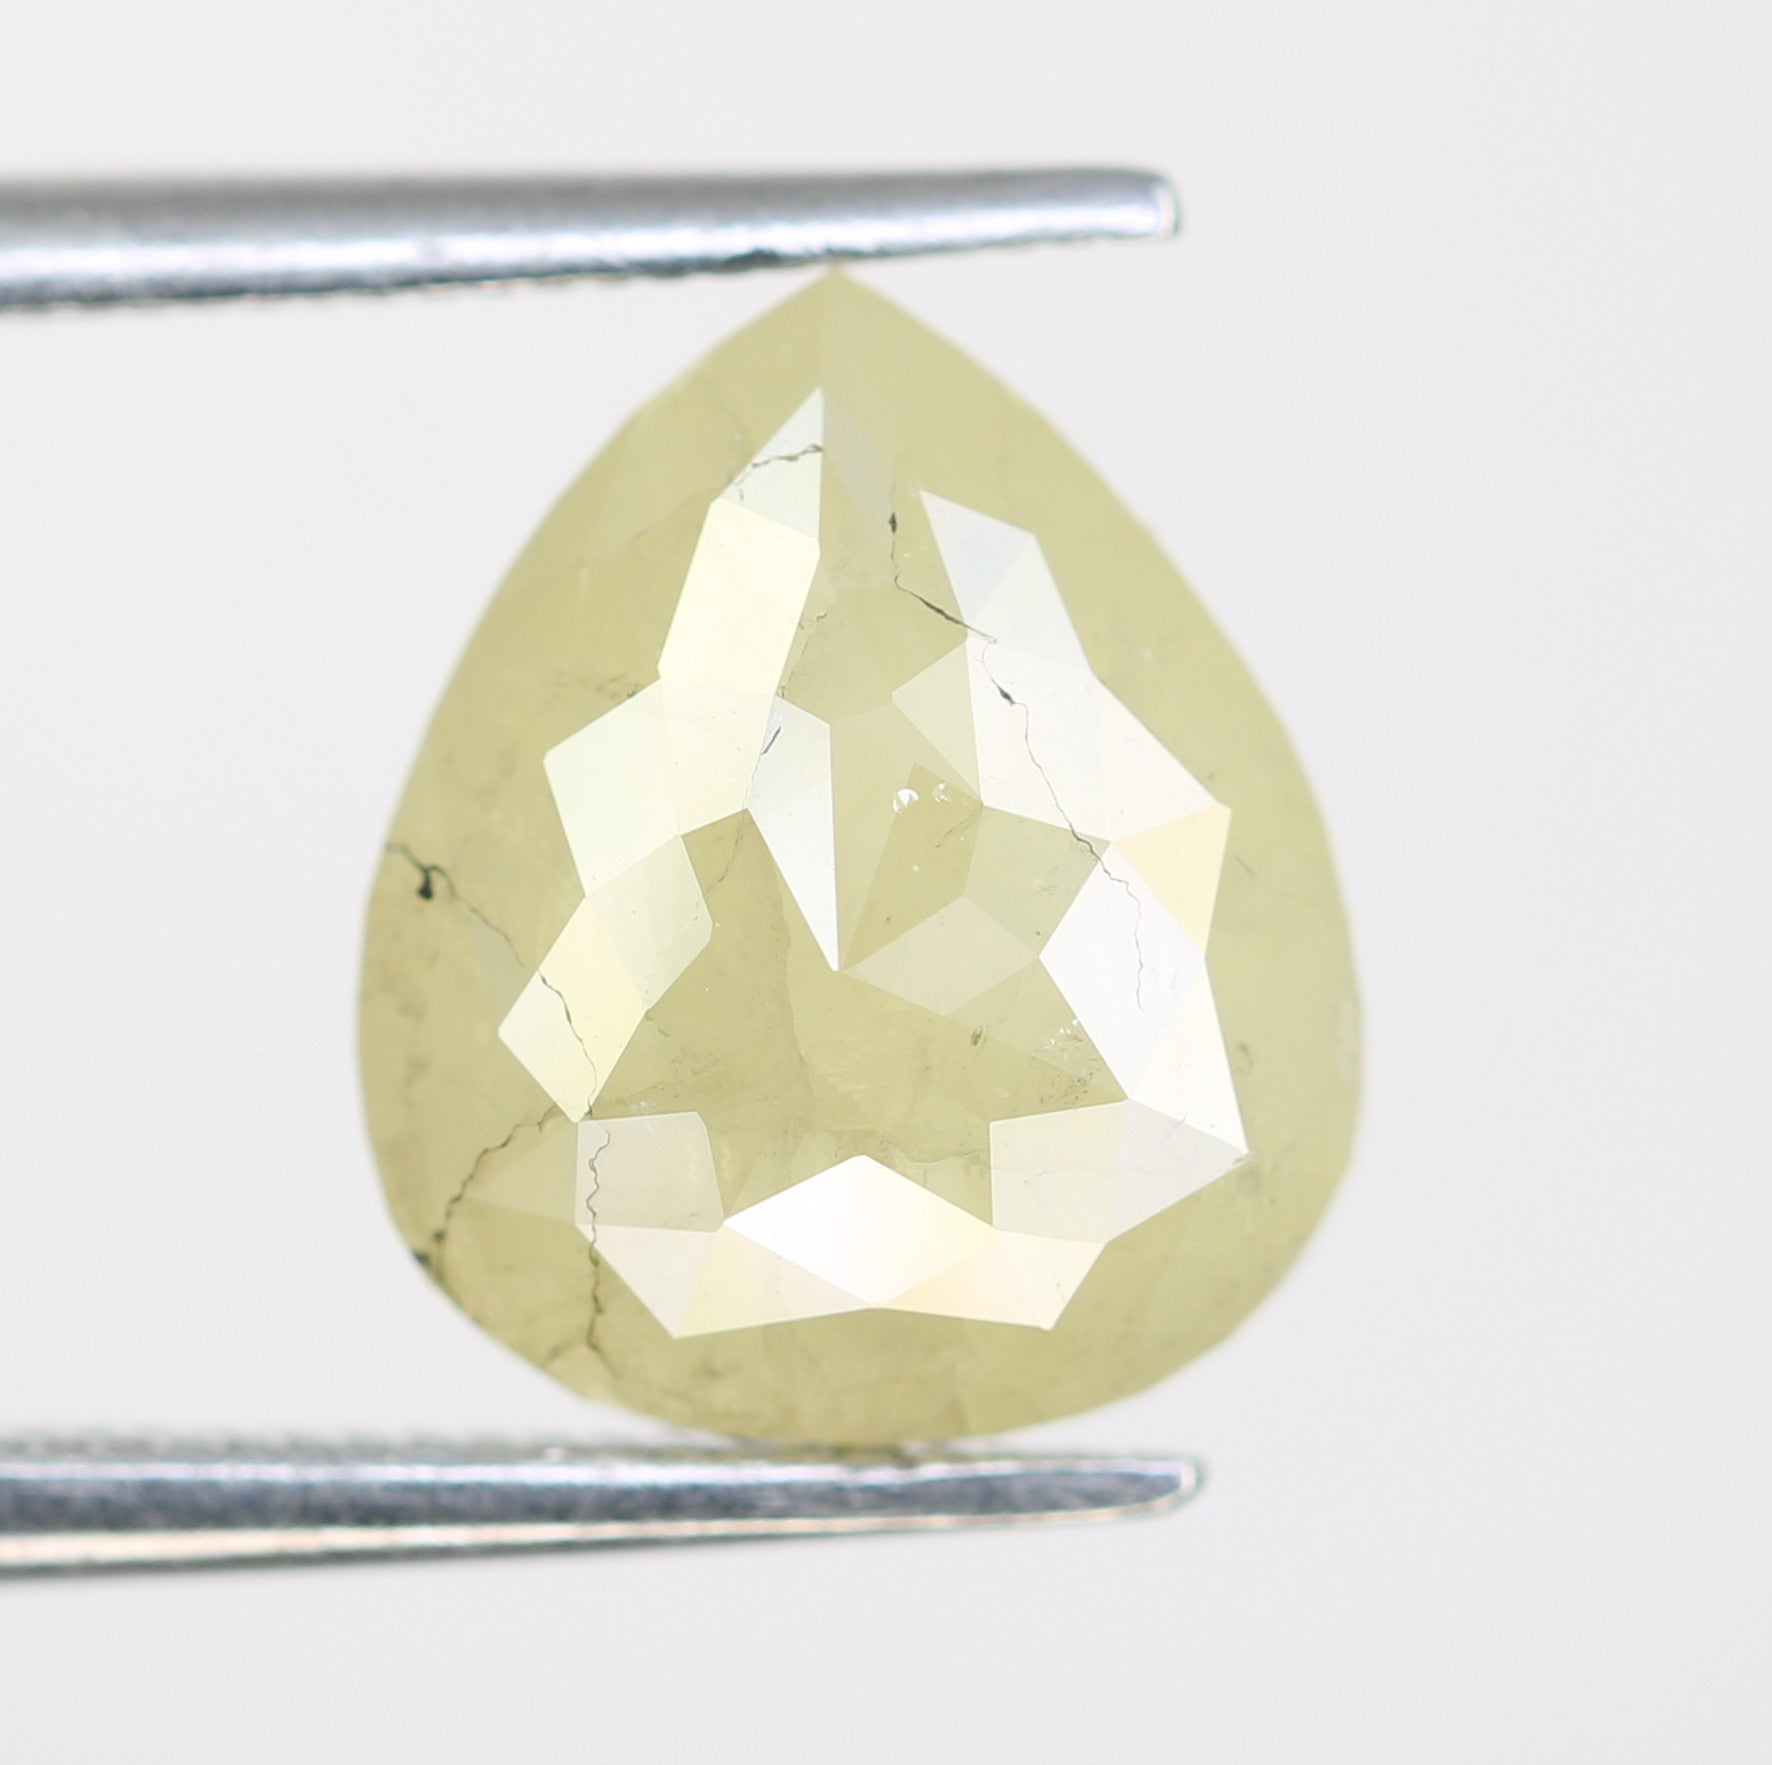 3.11 Carat Pear Shape Light Green Natural Loose Diamond For Wedding Ring